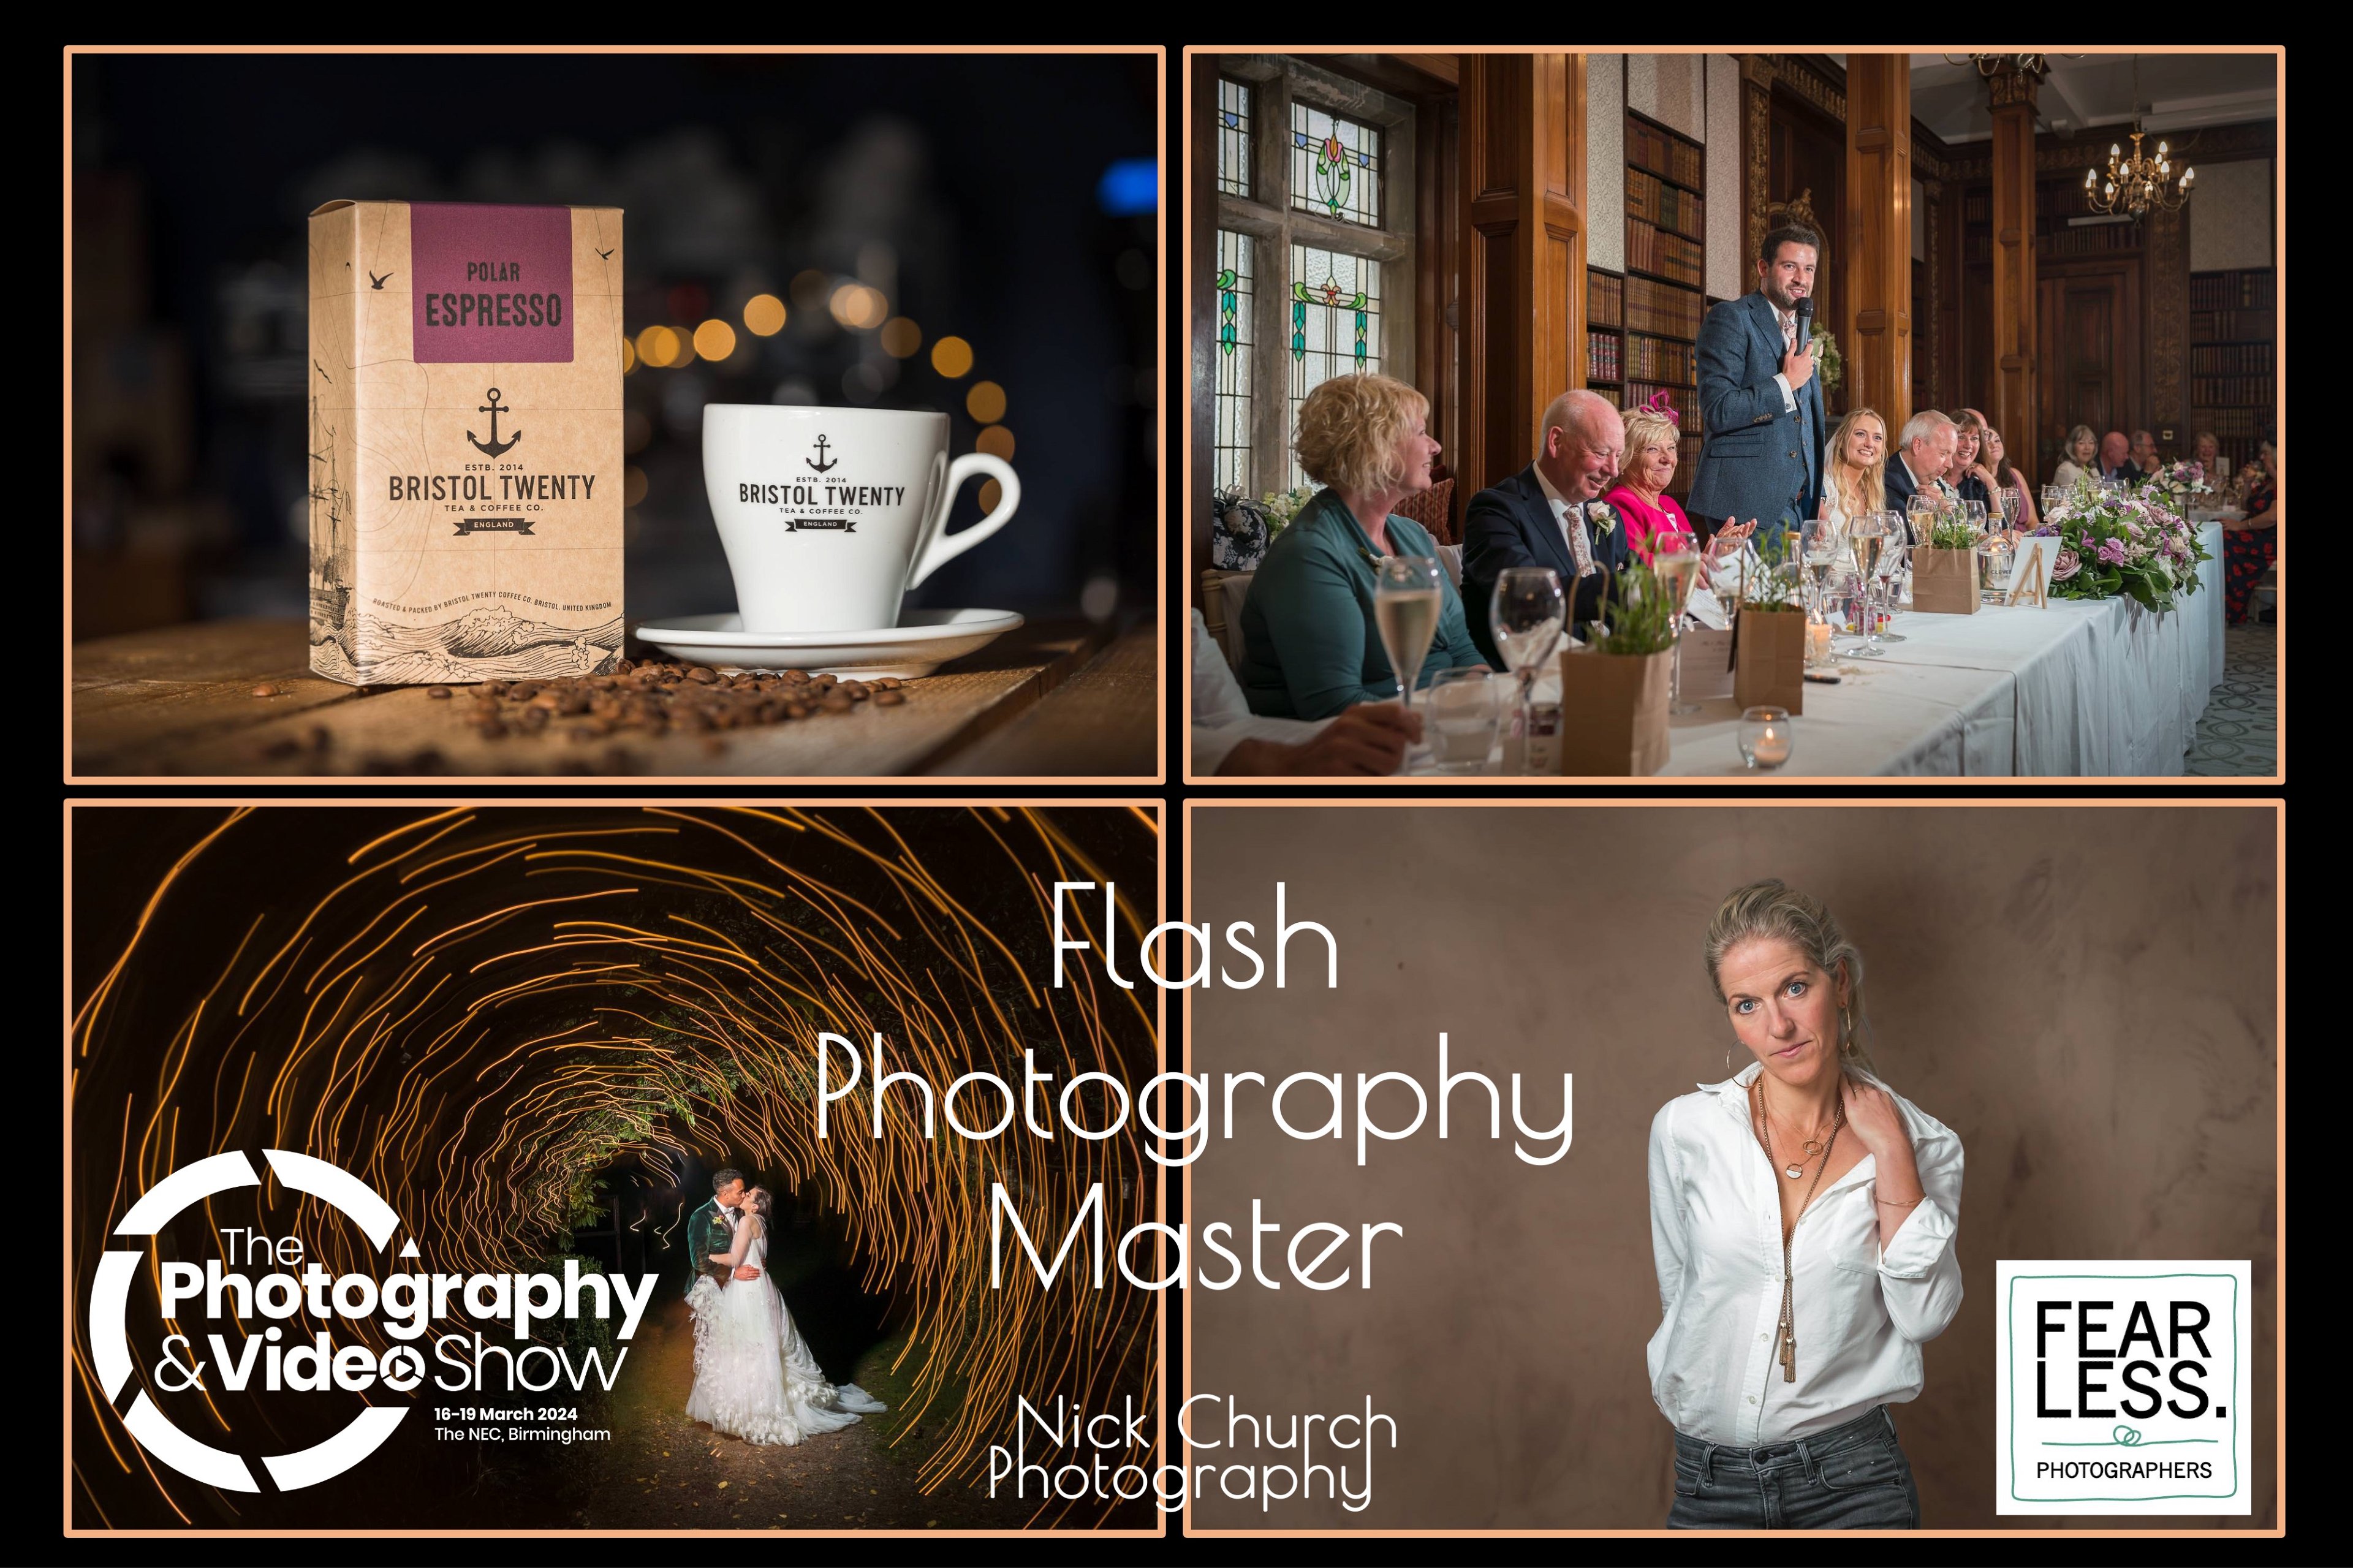 Flash Photography Master workshop